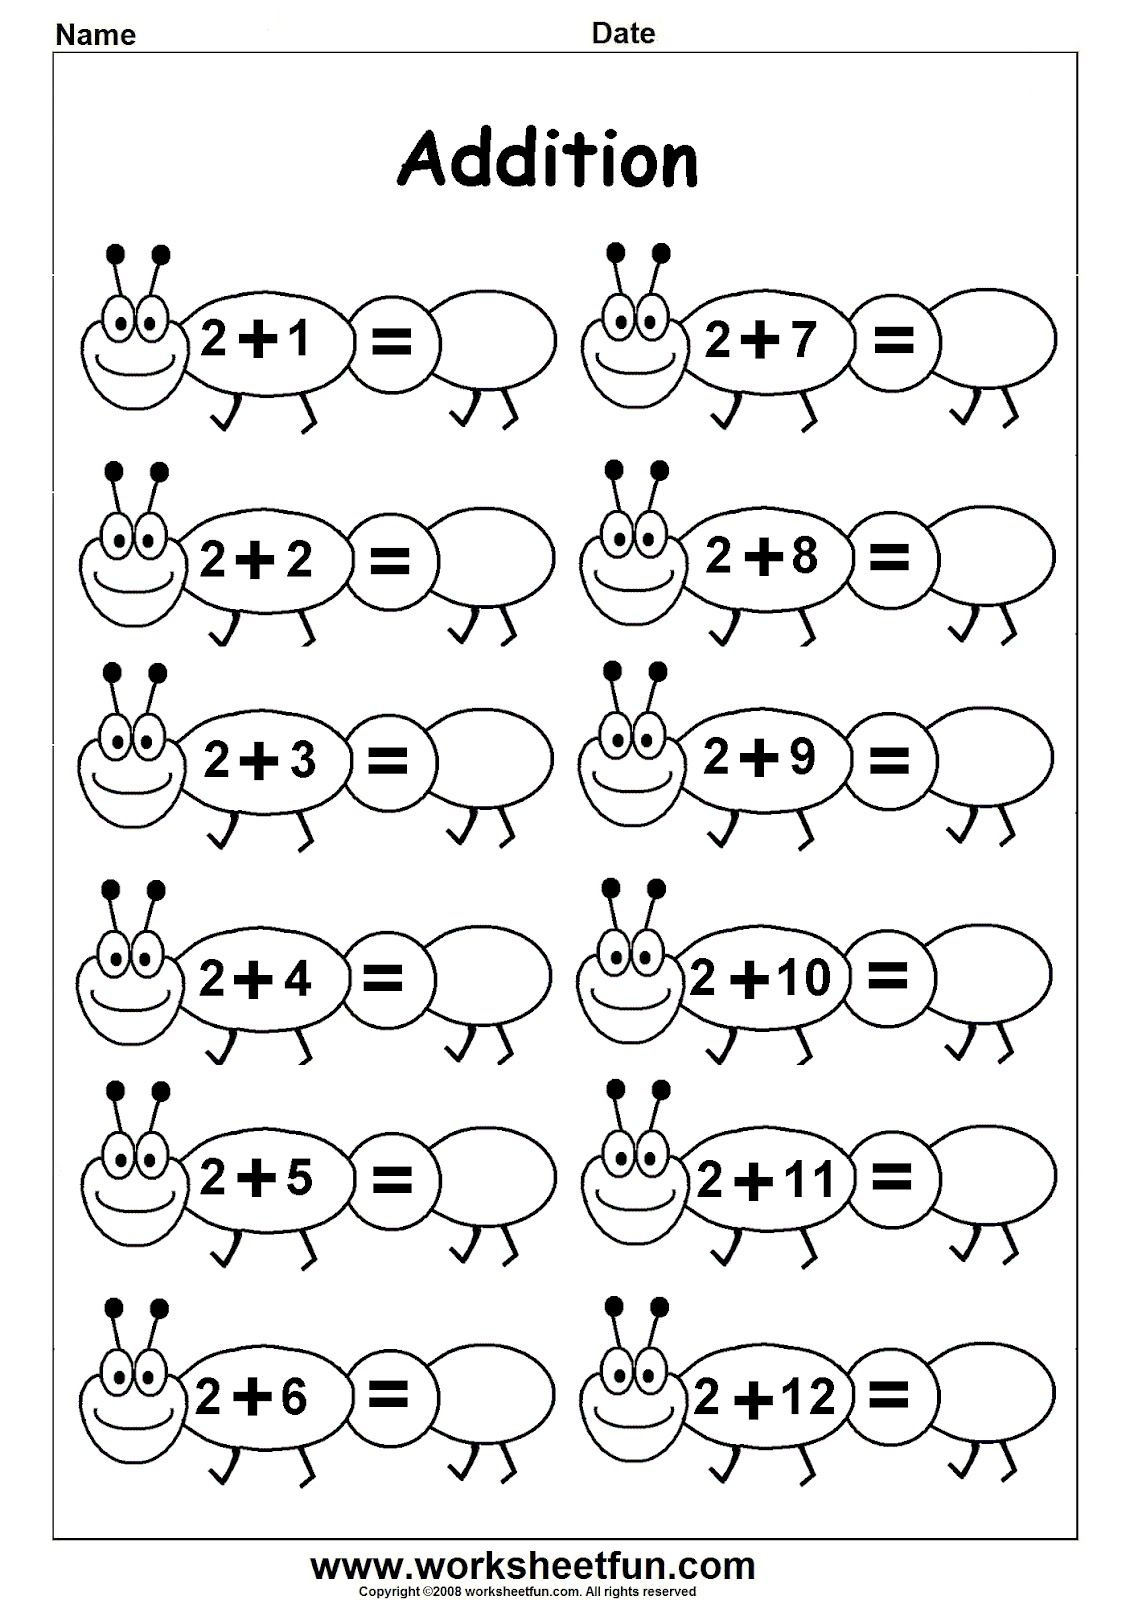 Worksheetfun - Free Printable Worksheets with regard to Free Printable Kinder Math Worksheets